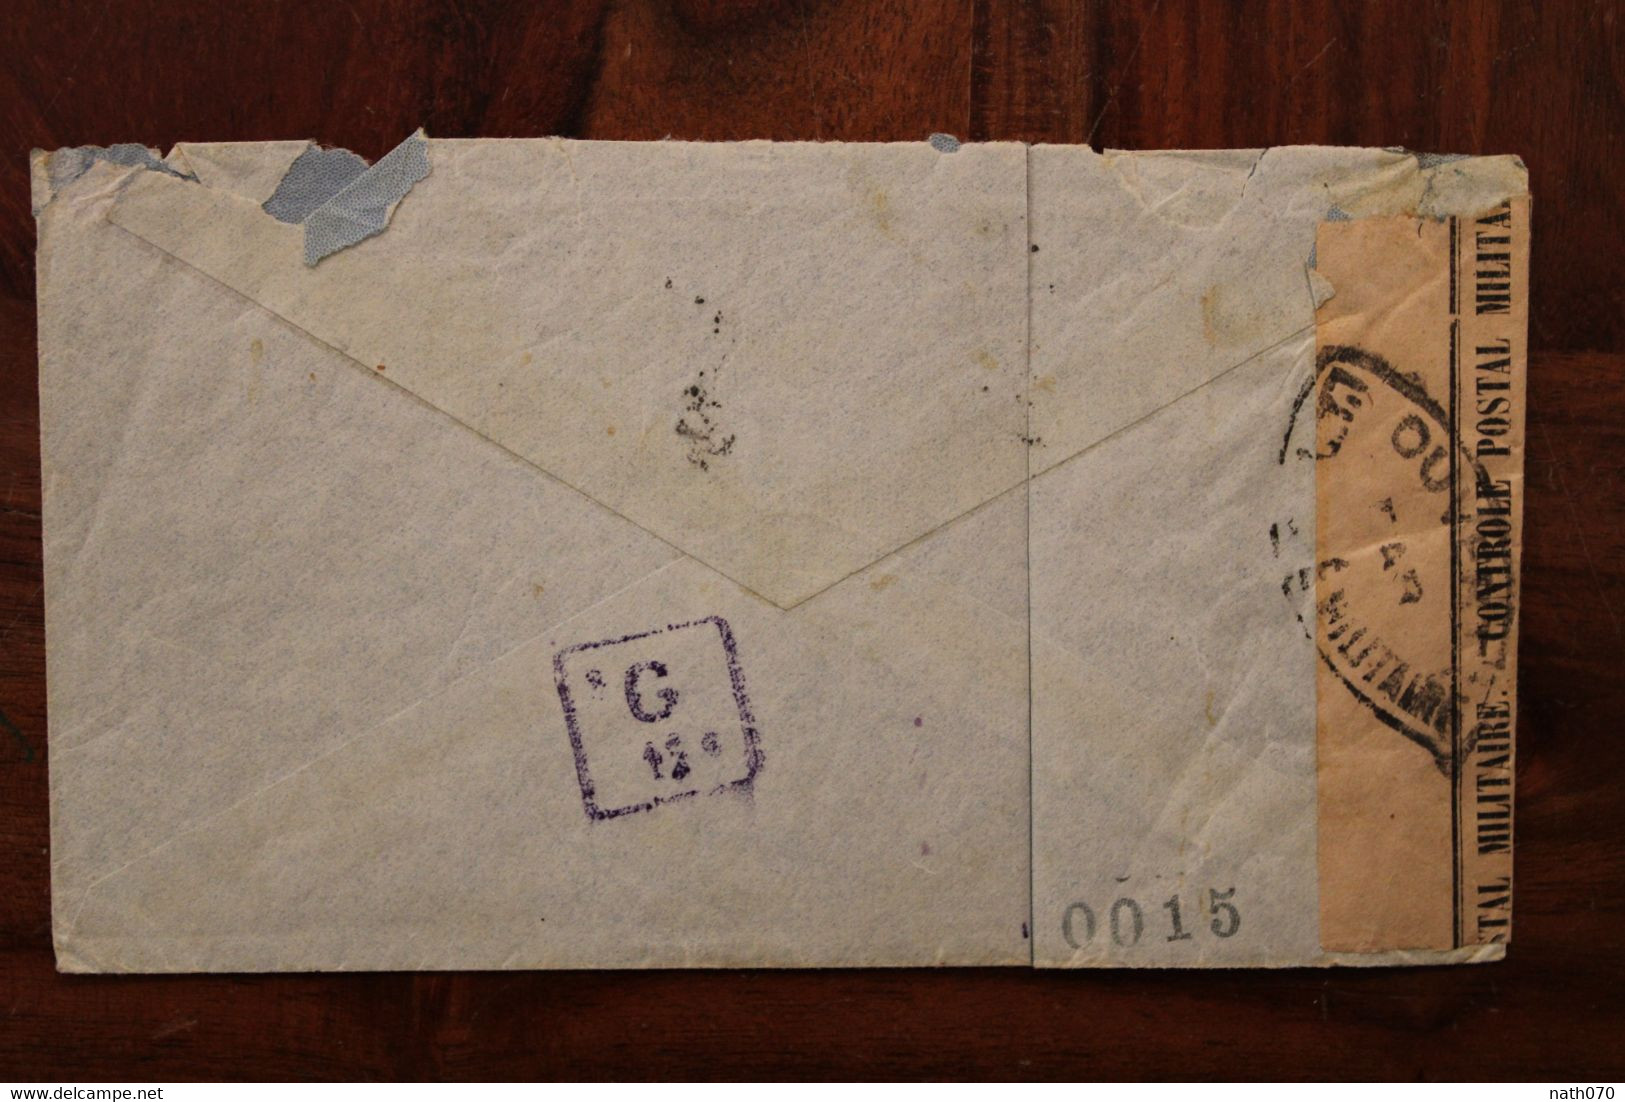 1945 Madagascar Contrôle Postal Censure Poste Aerienne Taxe Perçue Cover Air Mail Commission G12 - Covers & Documents